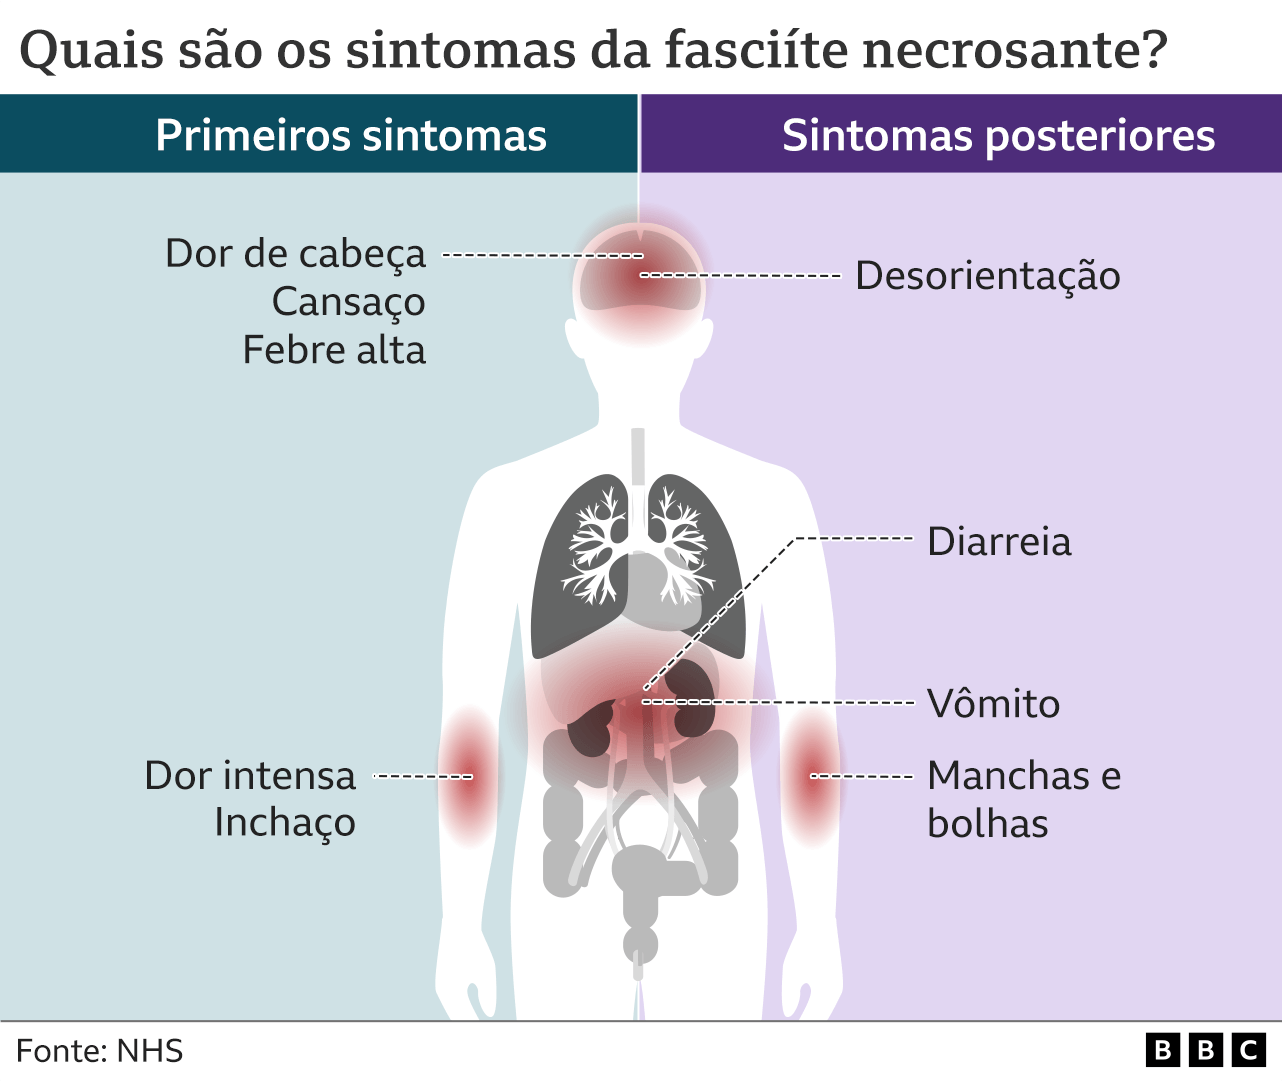 Infographic shows symptoms of necrotizing fasciitis